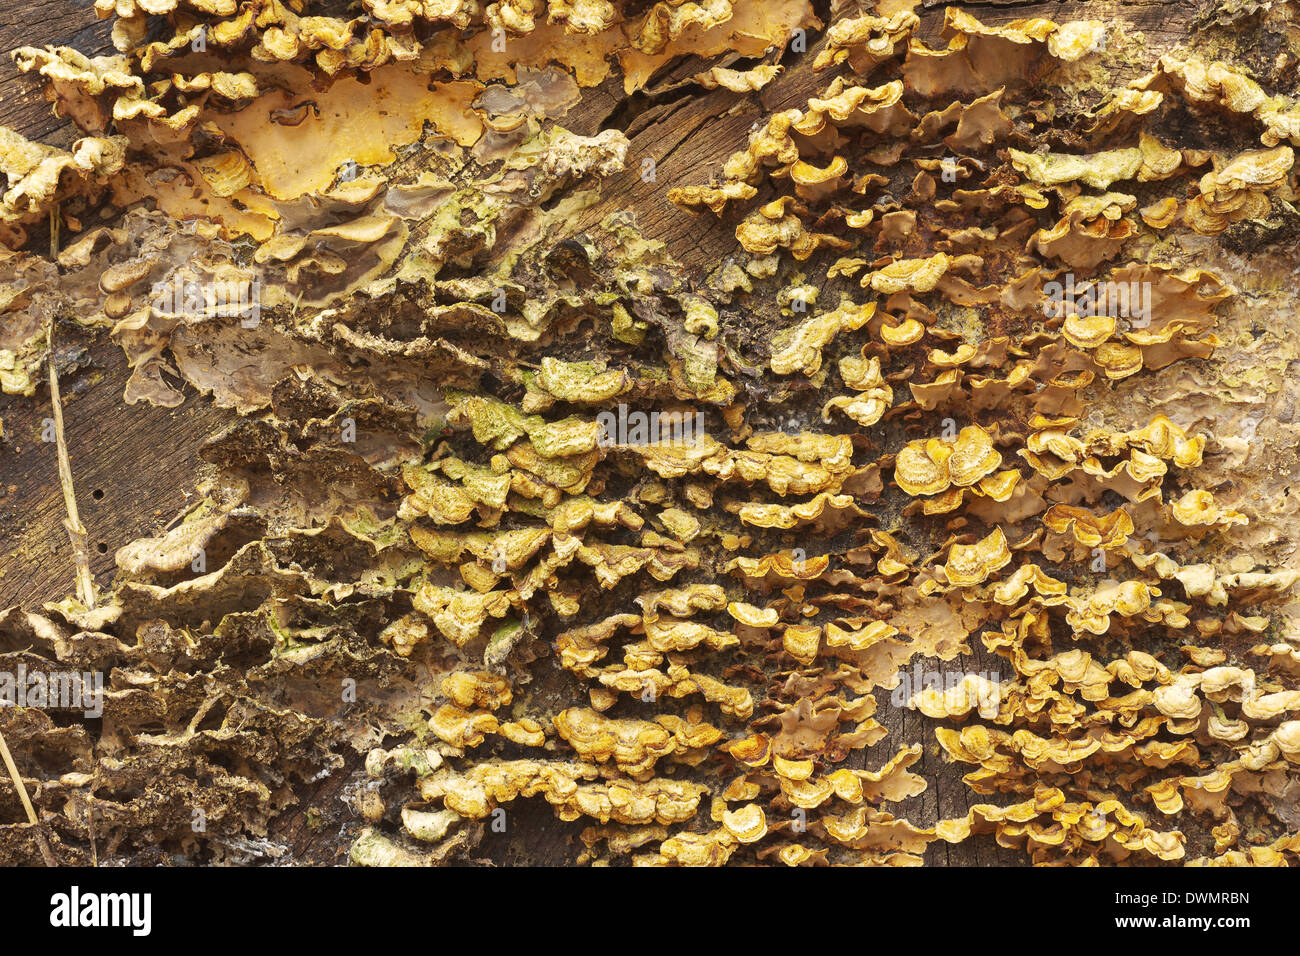 Background of orange fungus growing on a log Stock Photo